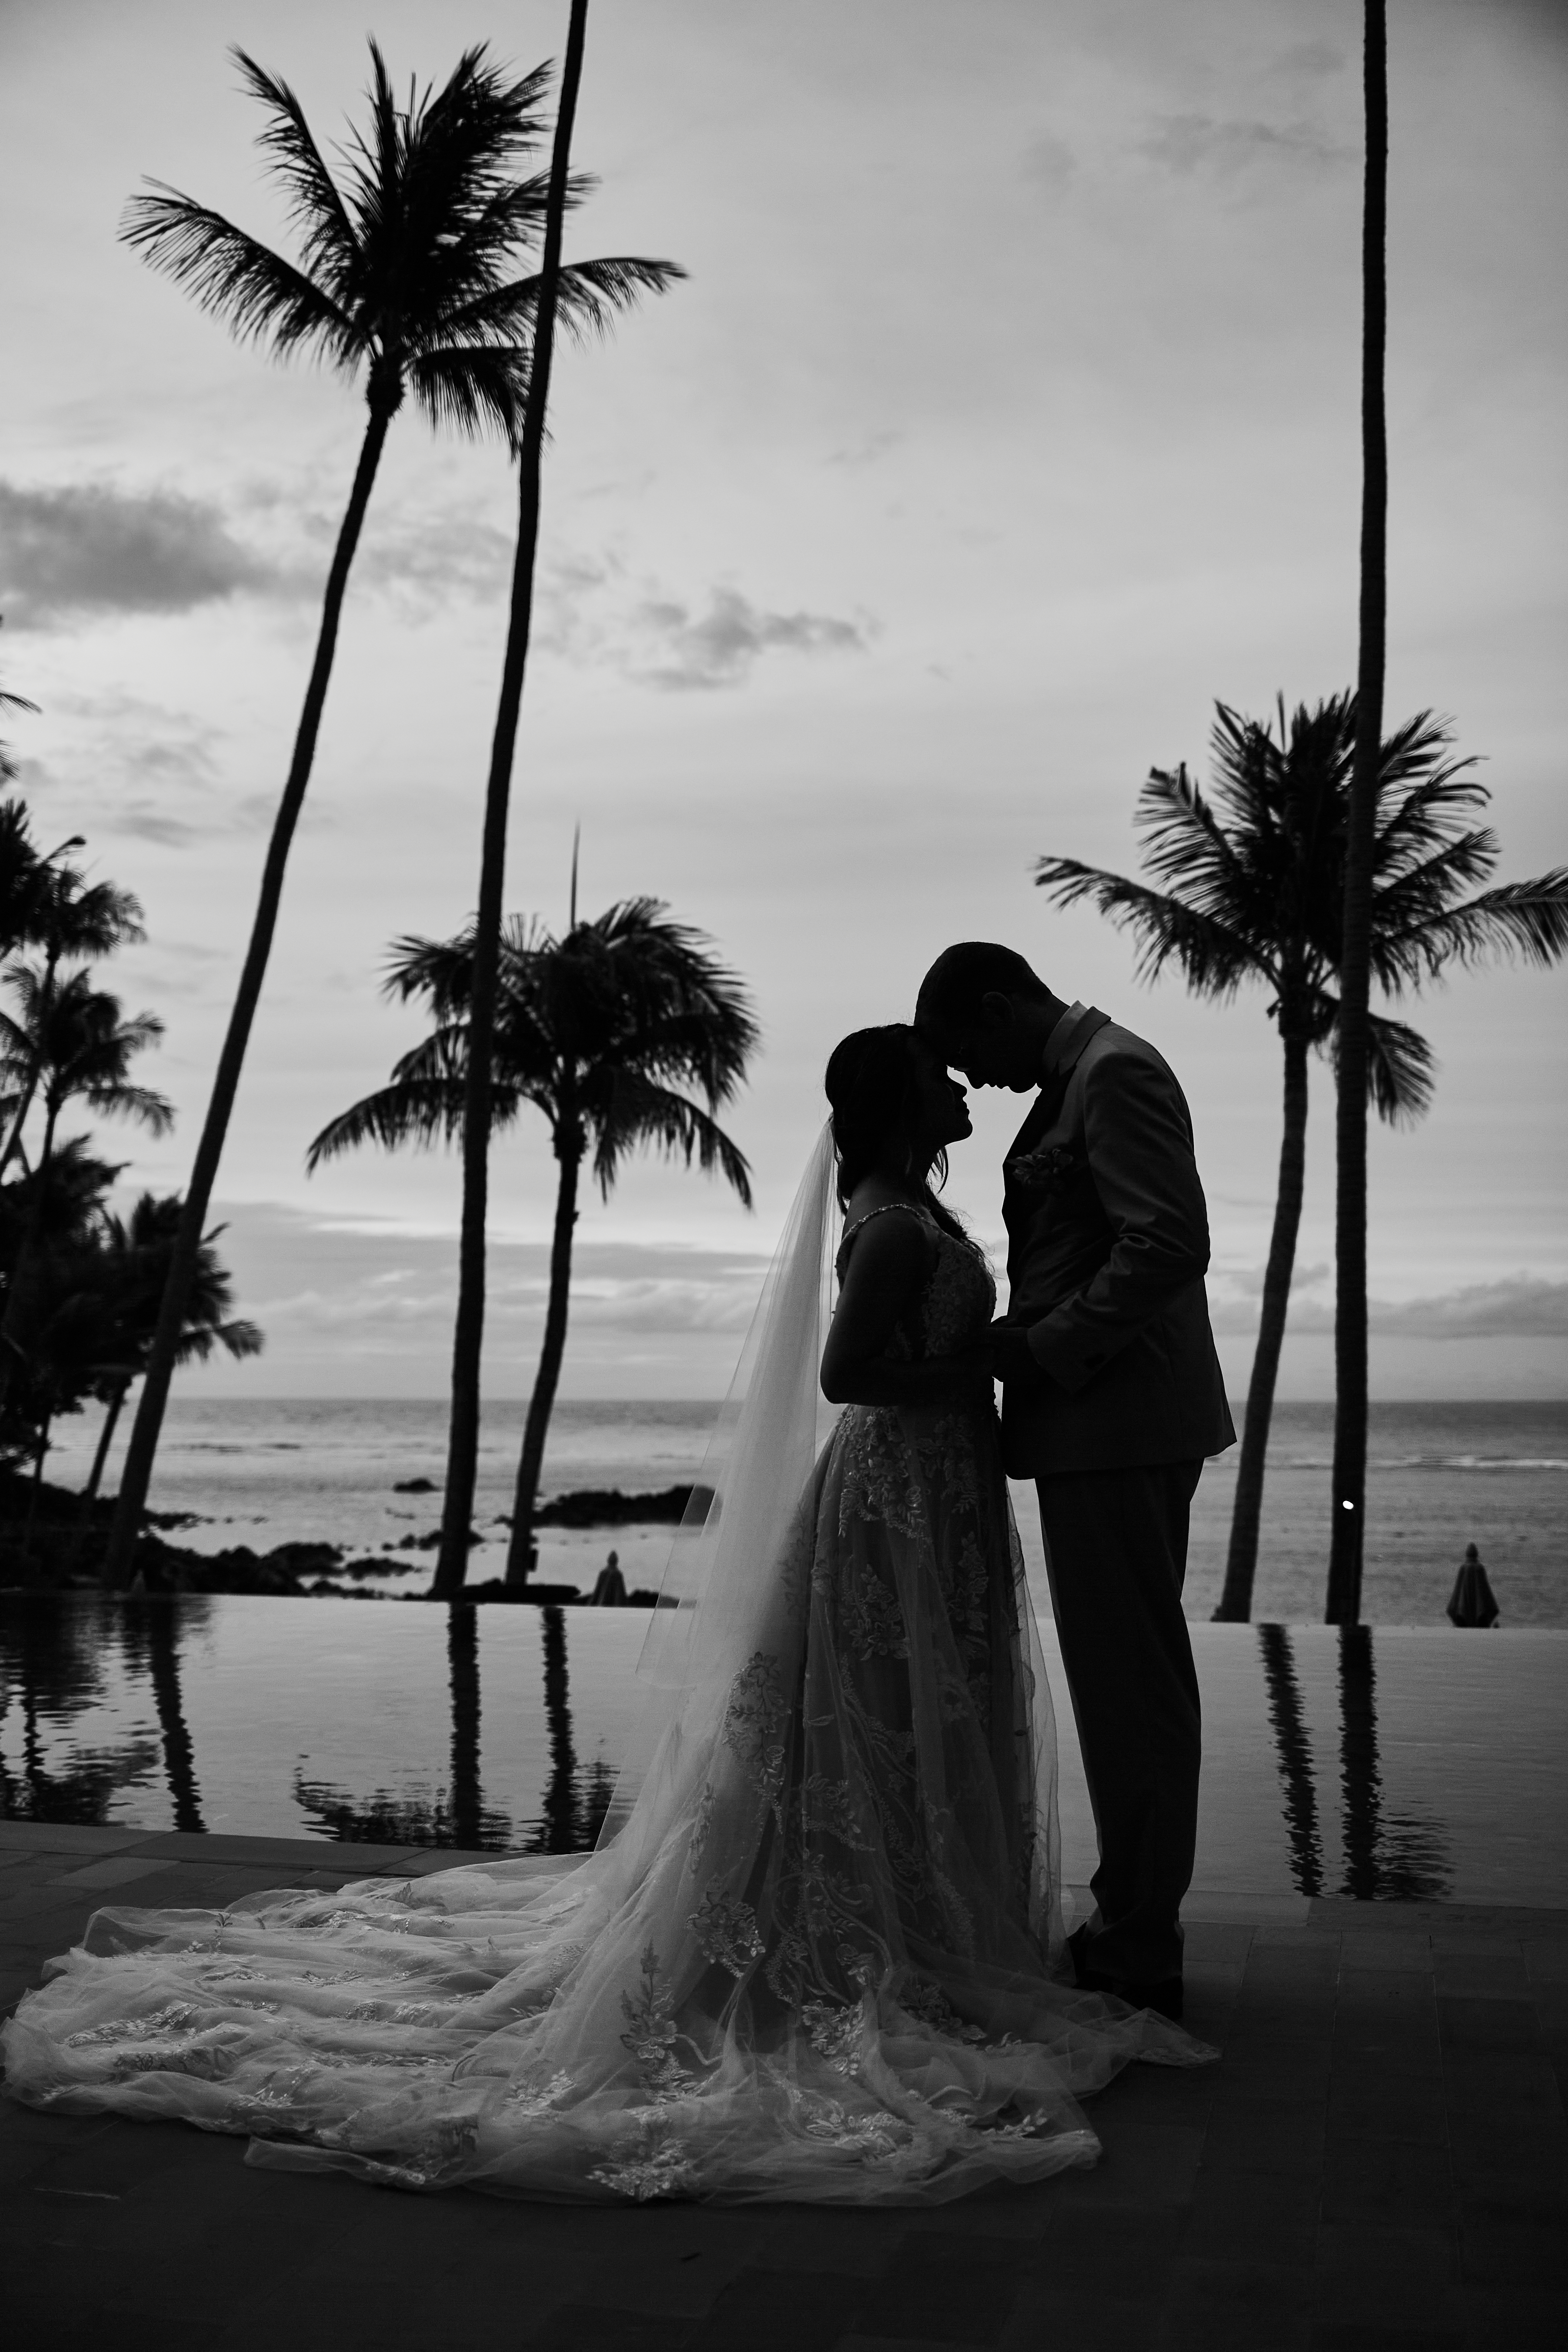 Wedding silhouette